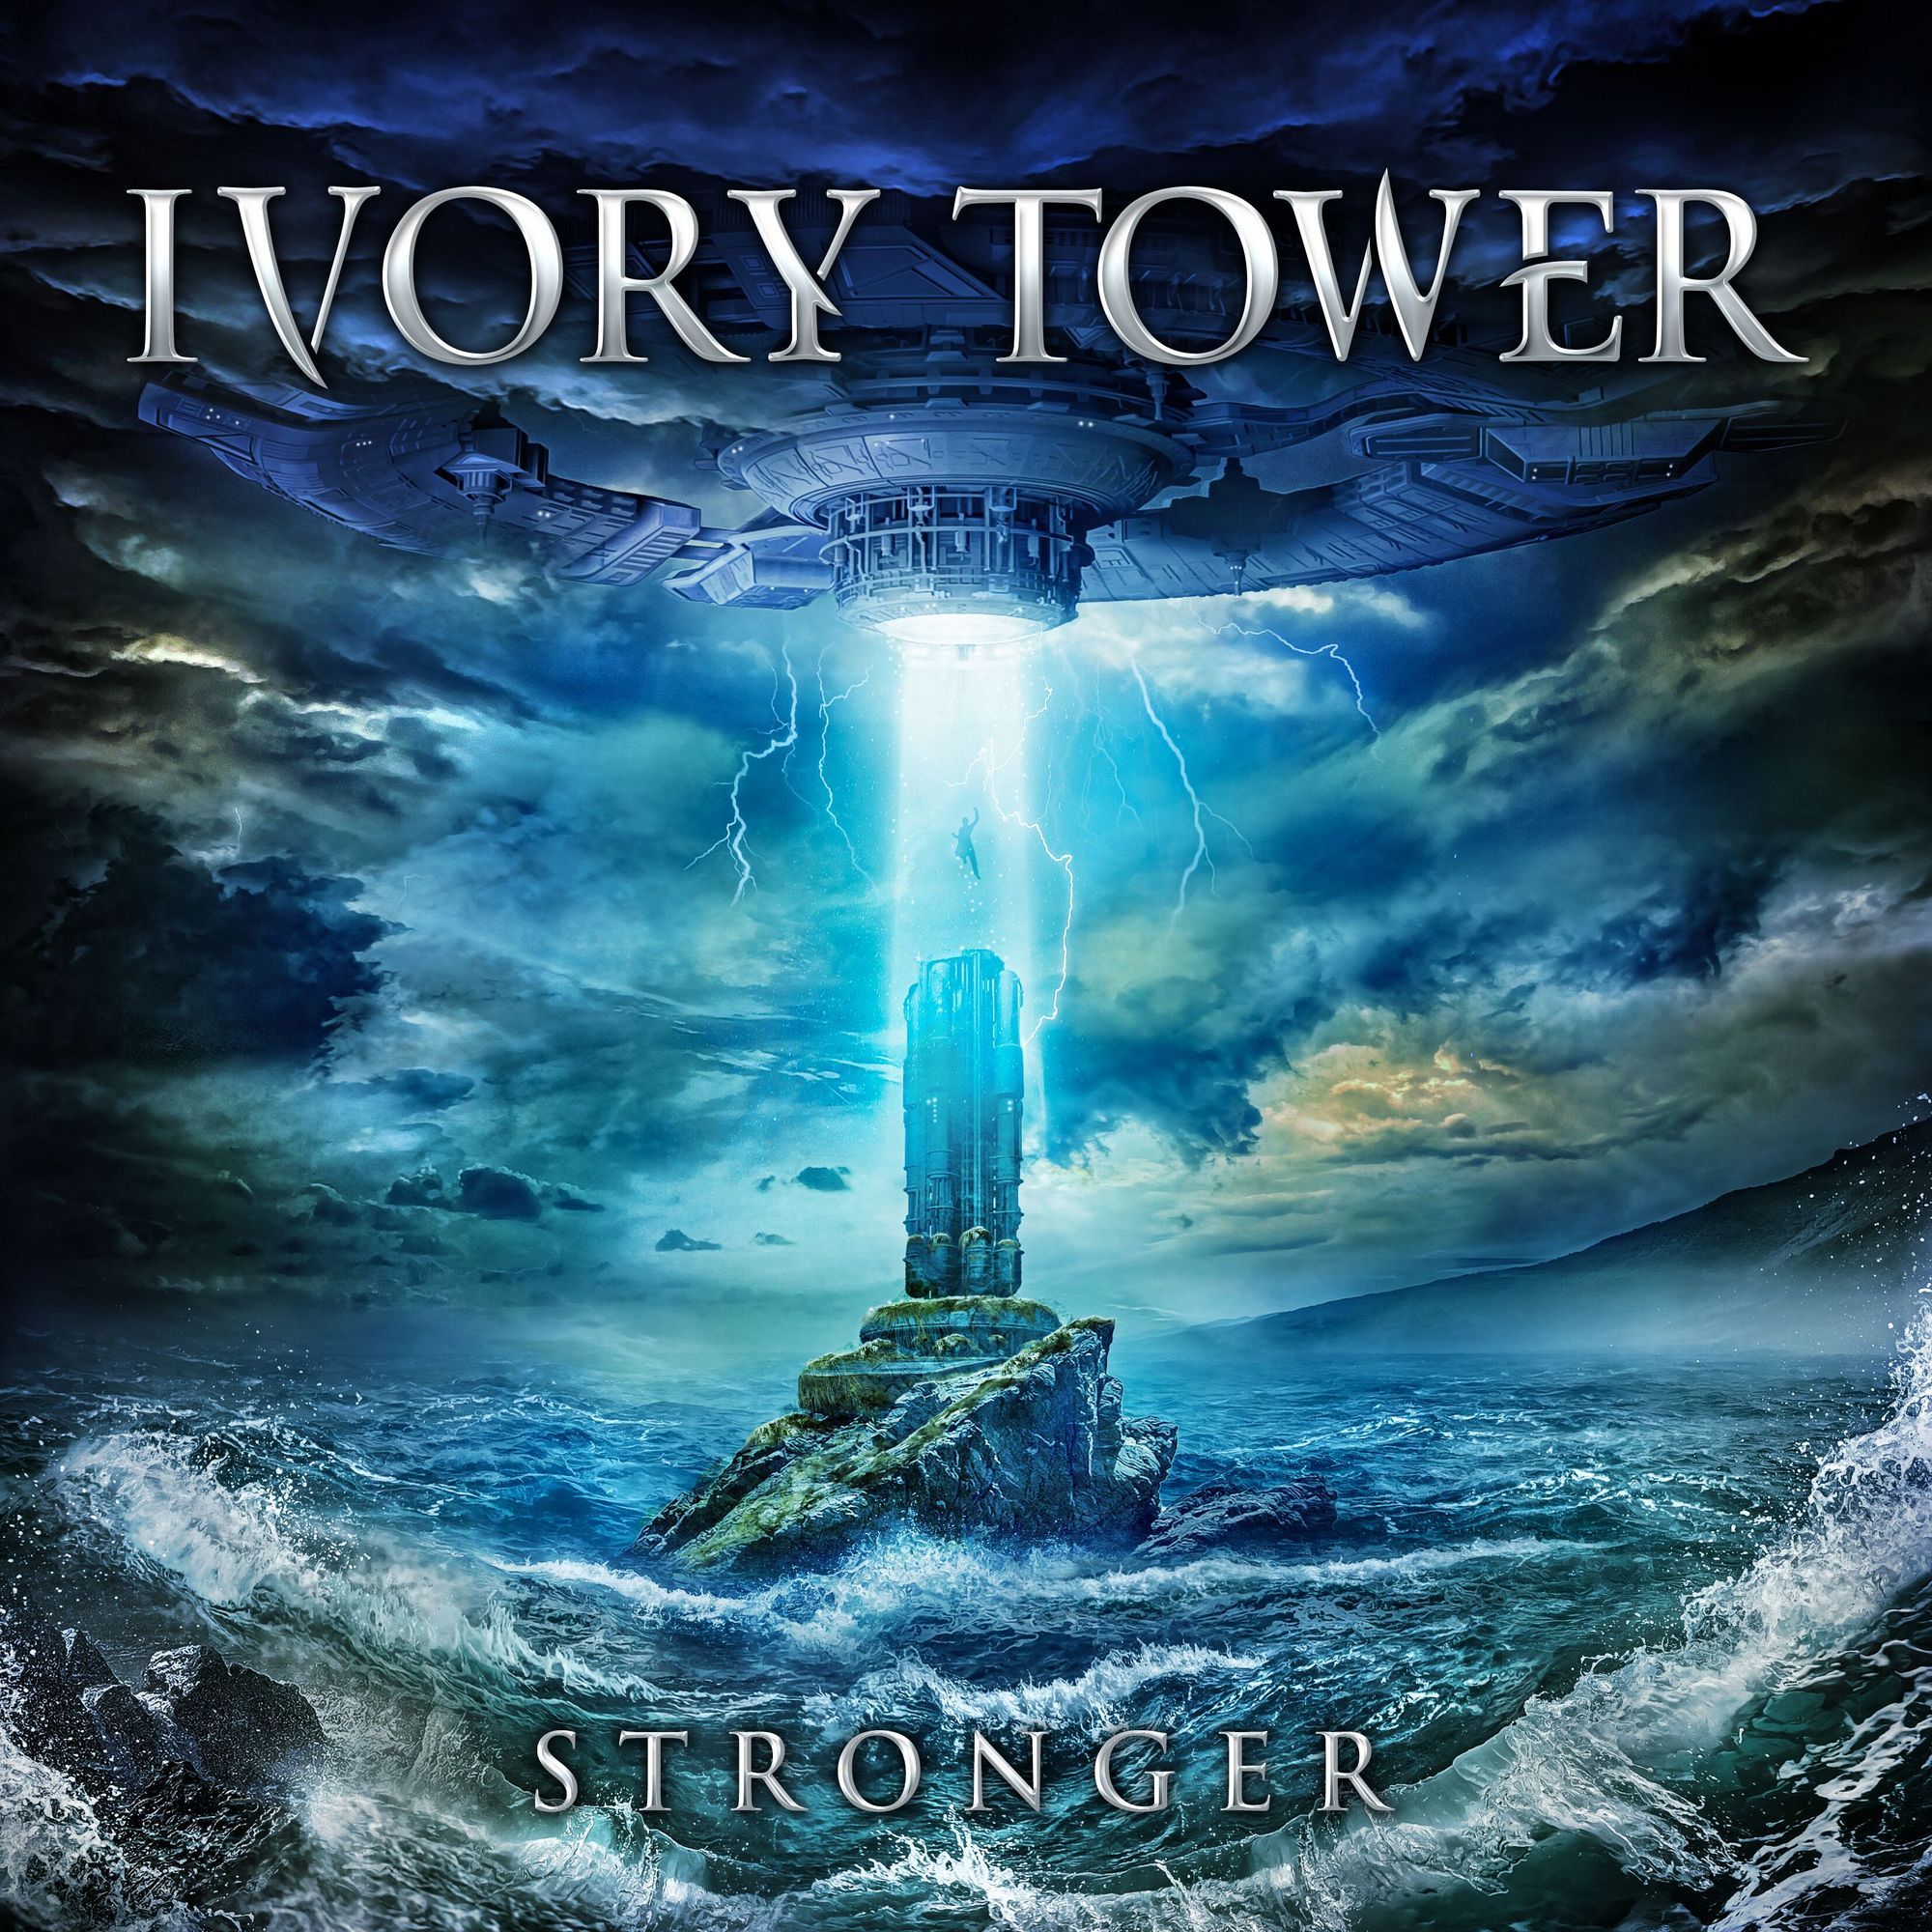 Ivory Tower - End Transmission (clip)